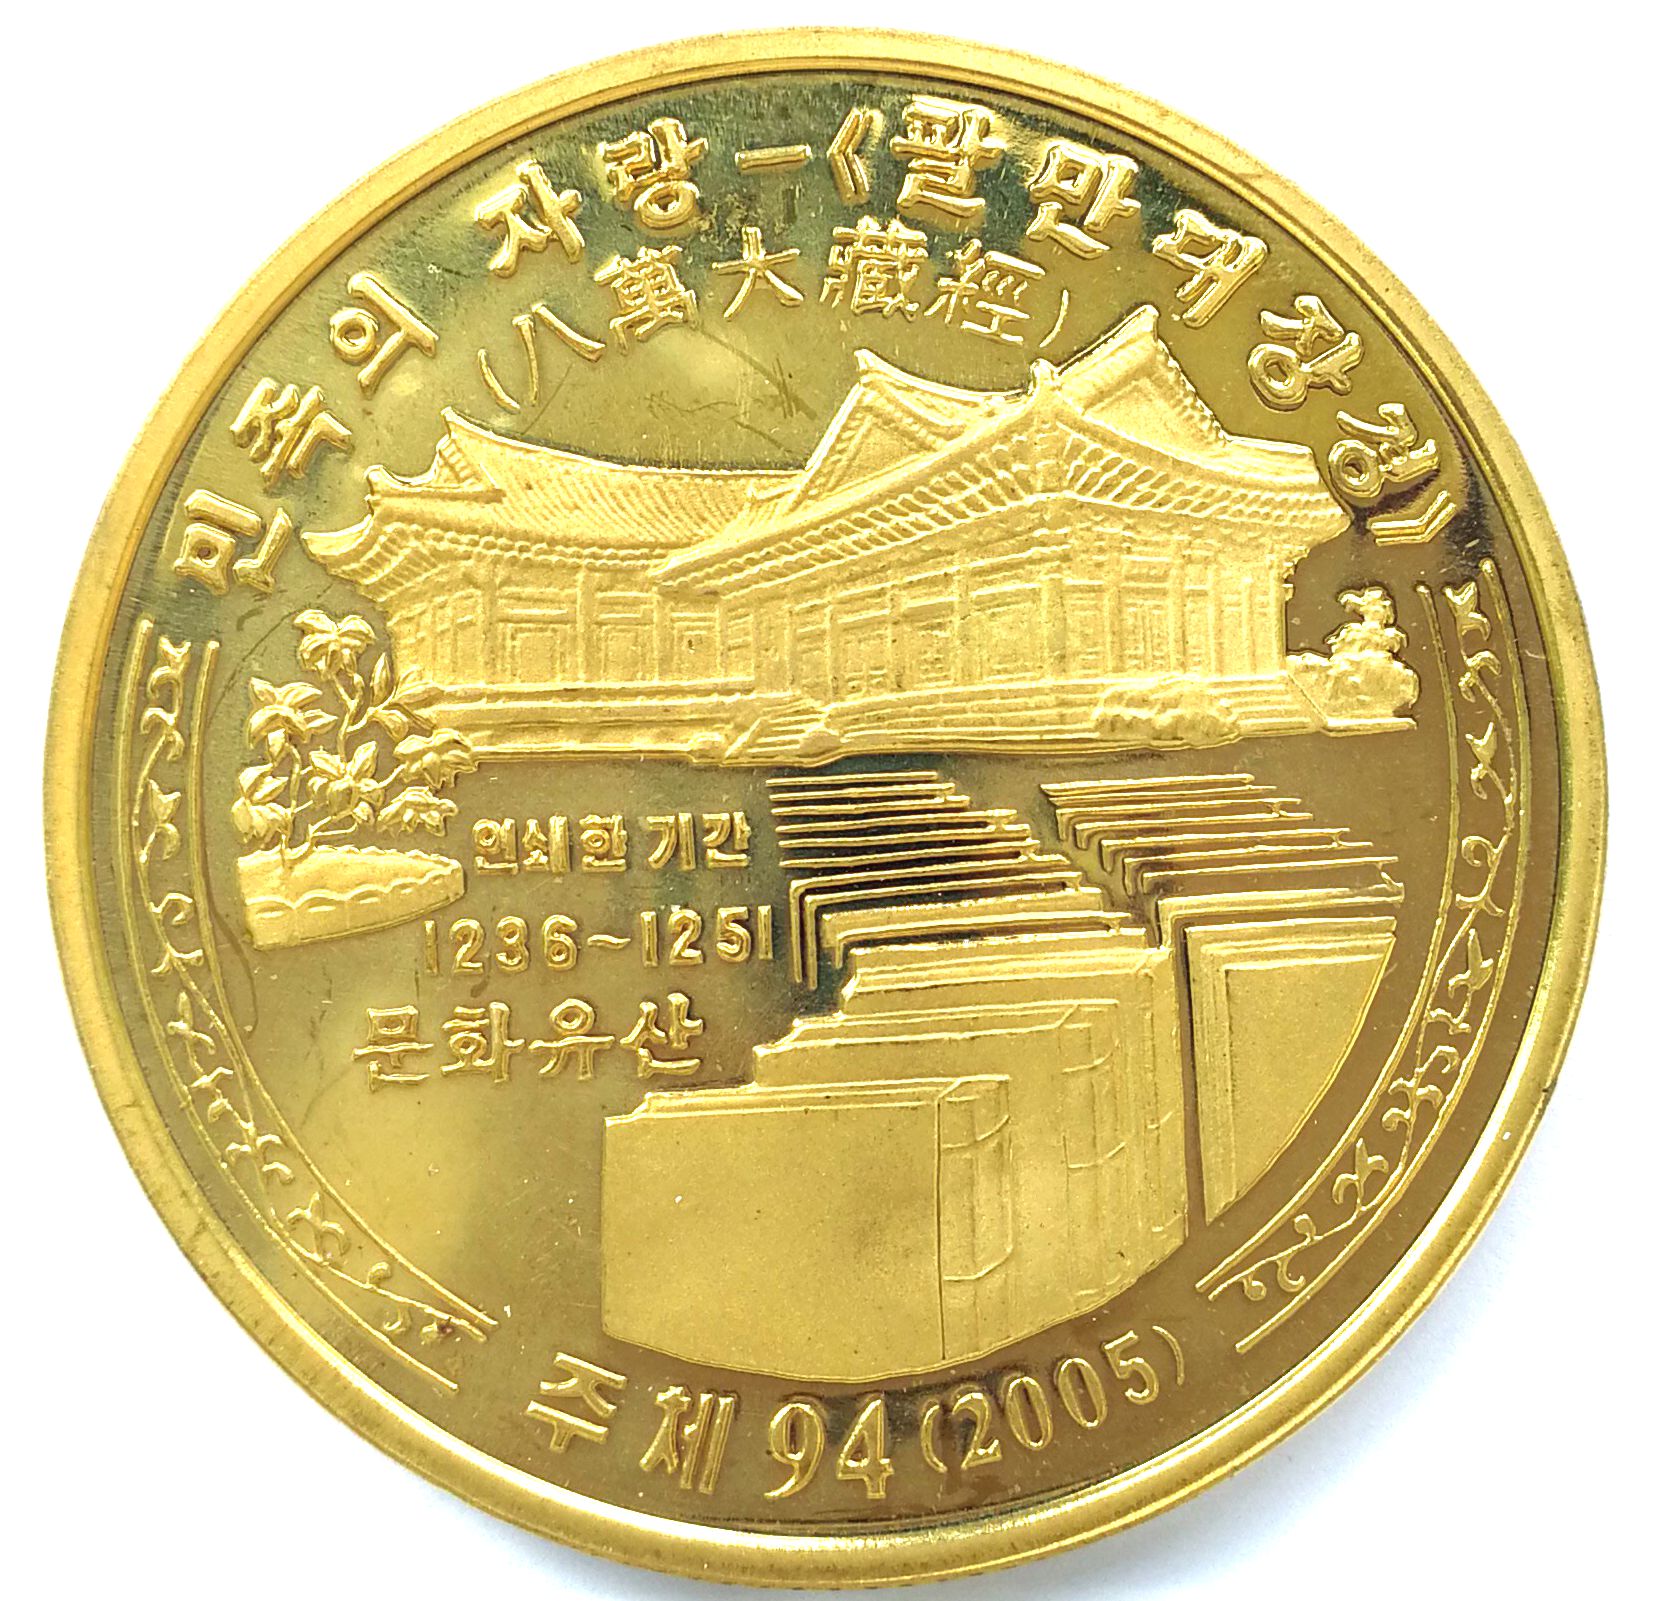 L3322, Korea "Tripitaka Koreana" World Heritage Coin 20 Won, 2005